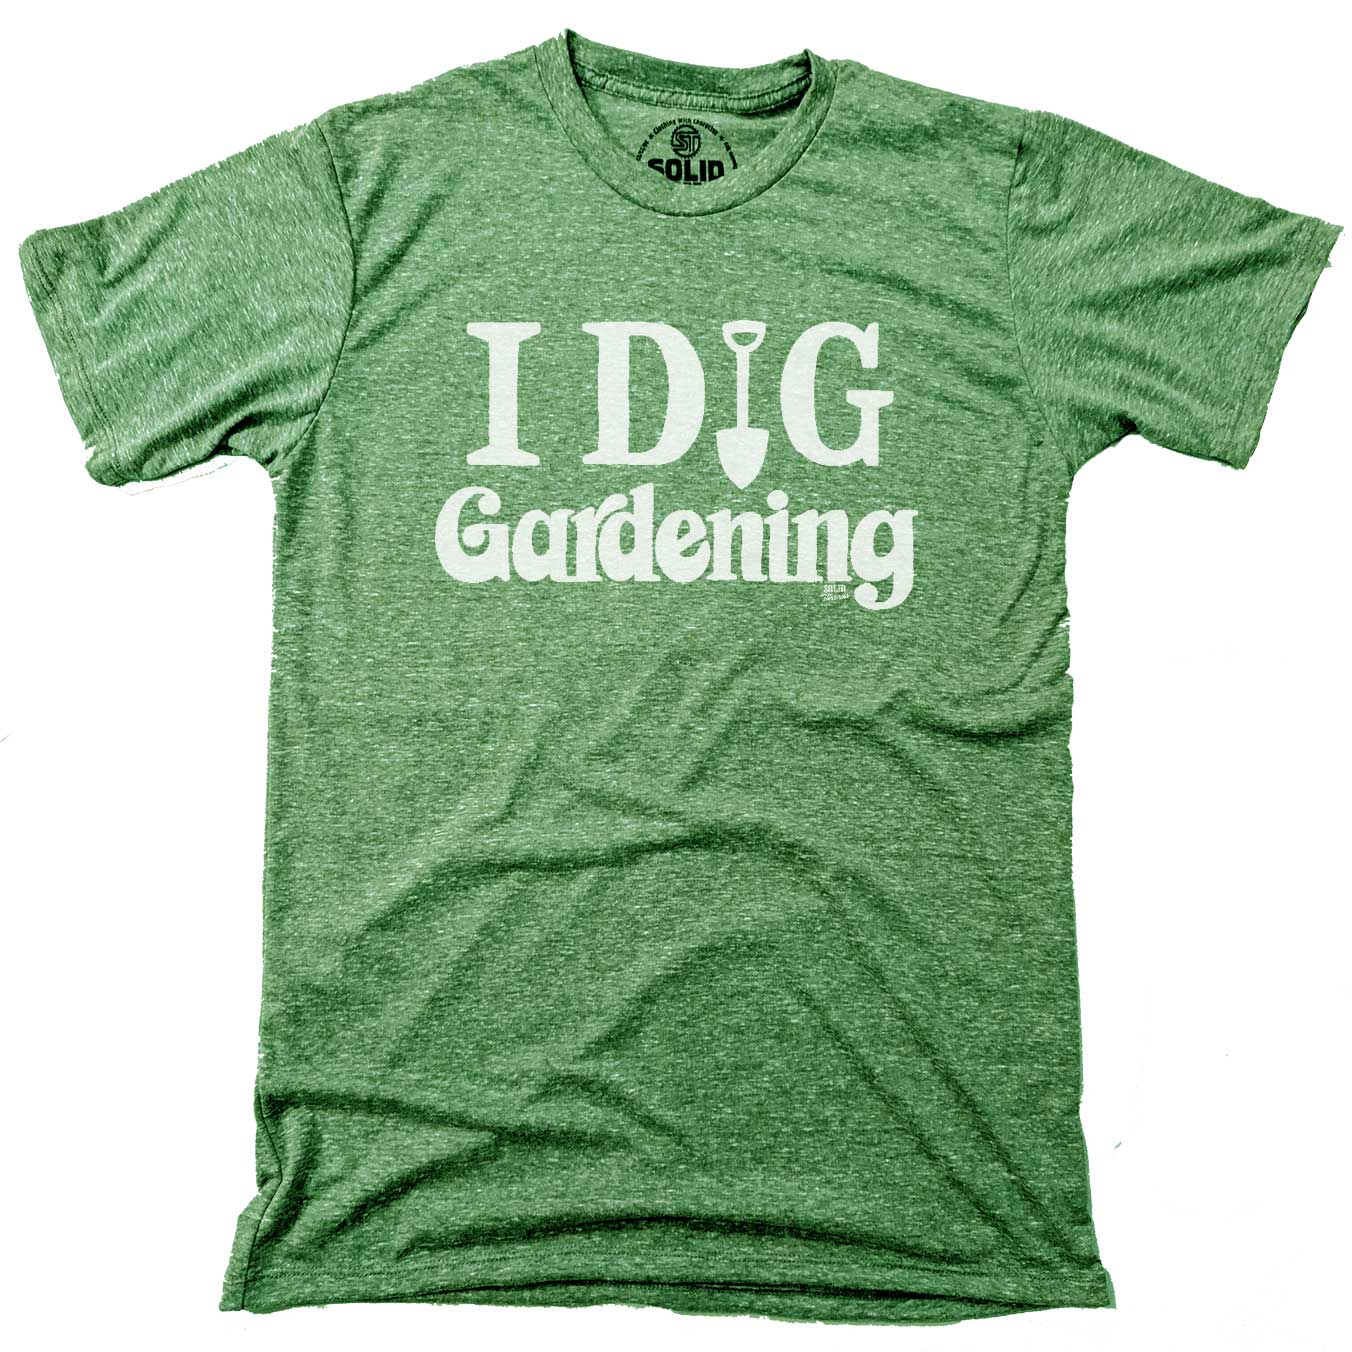 Men's Green Thumb T-shirt Series Set | Vintage Gardening Gift Bundle | Solid Threads